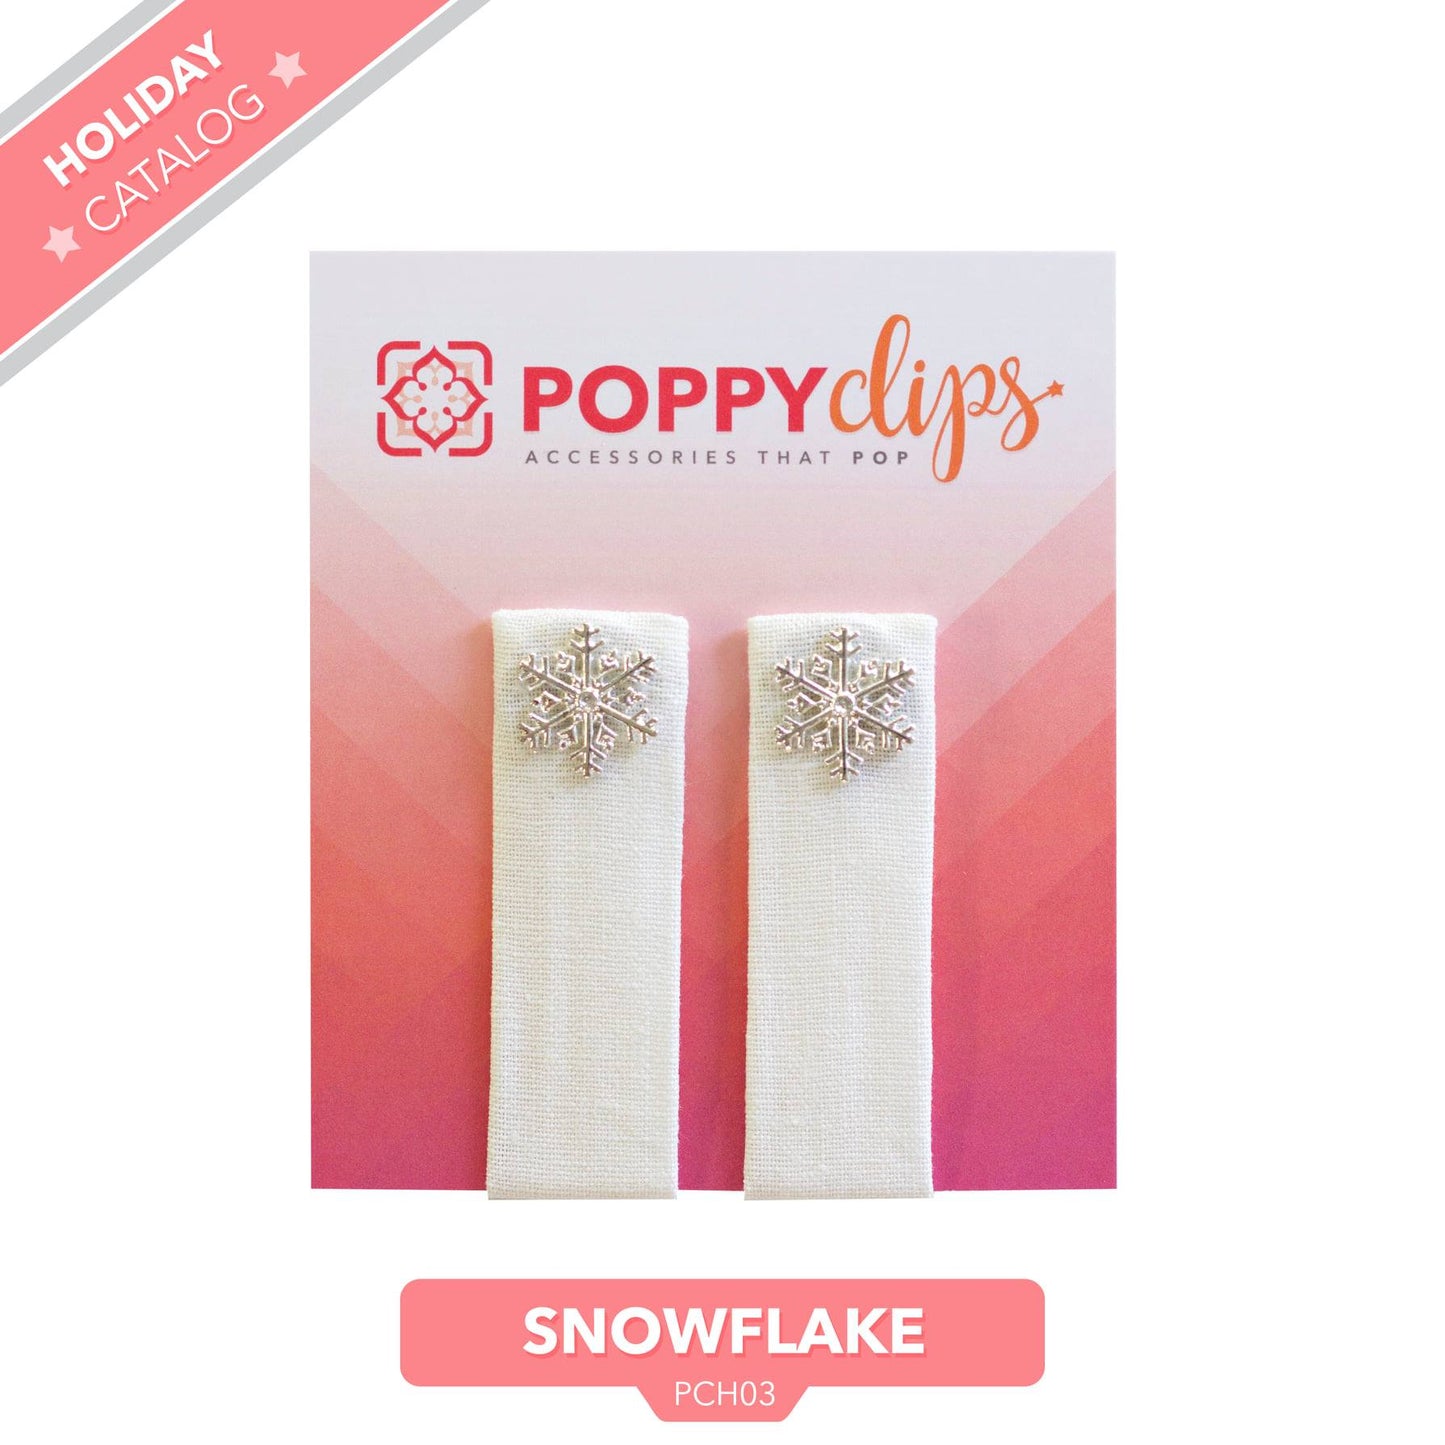 PoppyClips: Snowflake